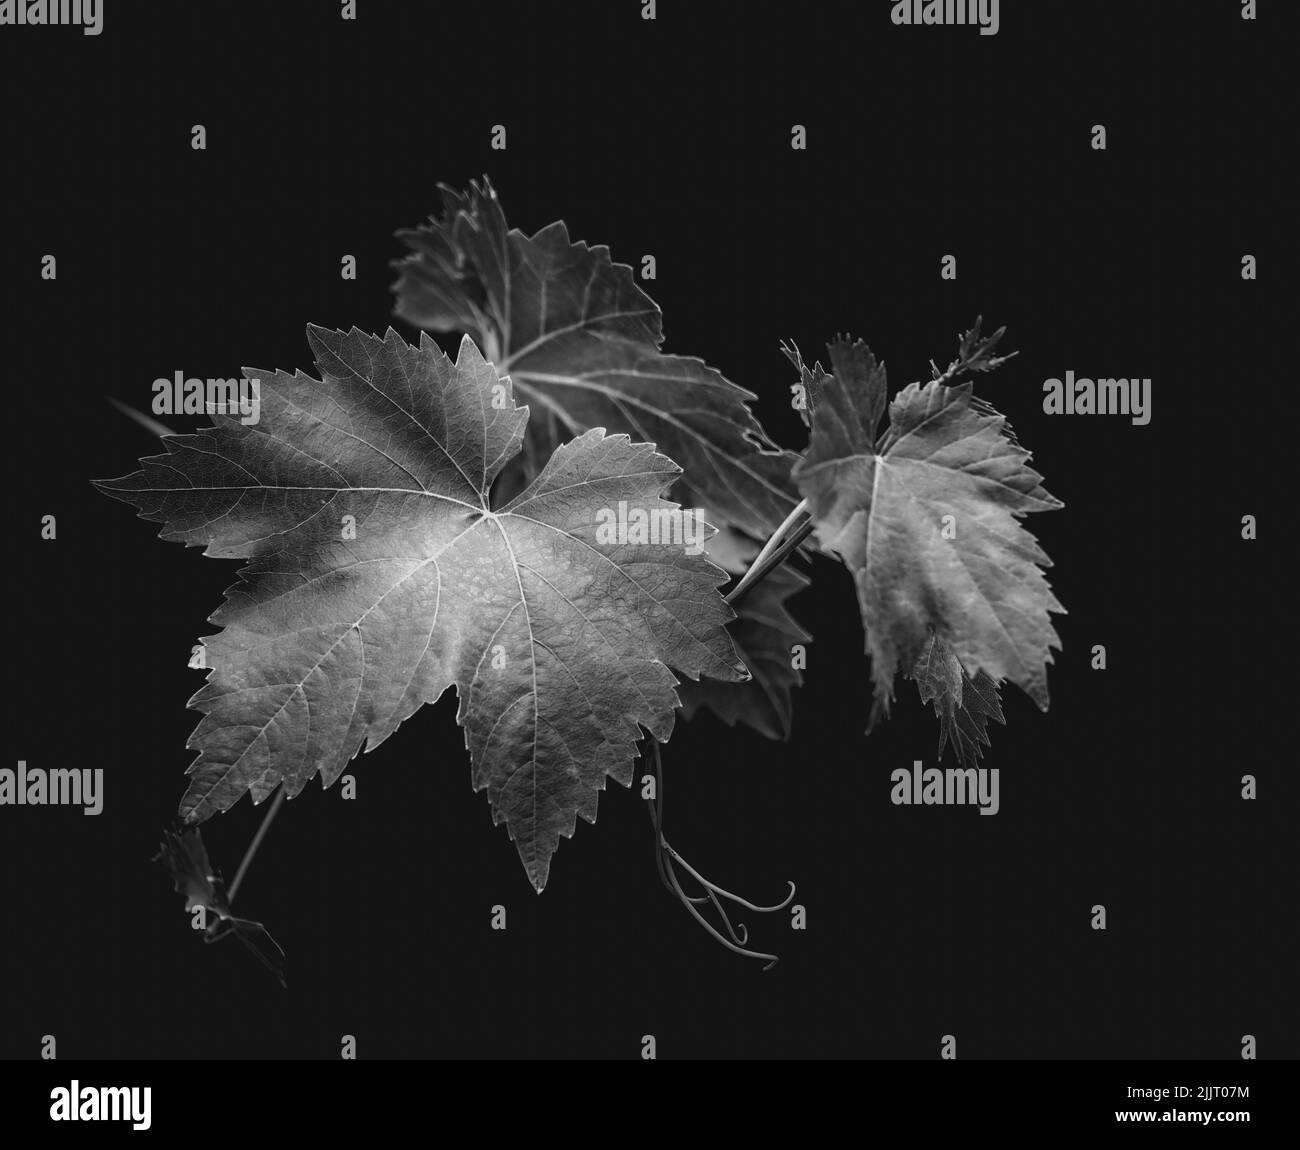 Monochrome image of vine leaf (Vitis vinifera) isolated against a black background Stock Photo